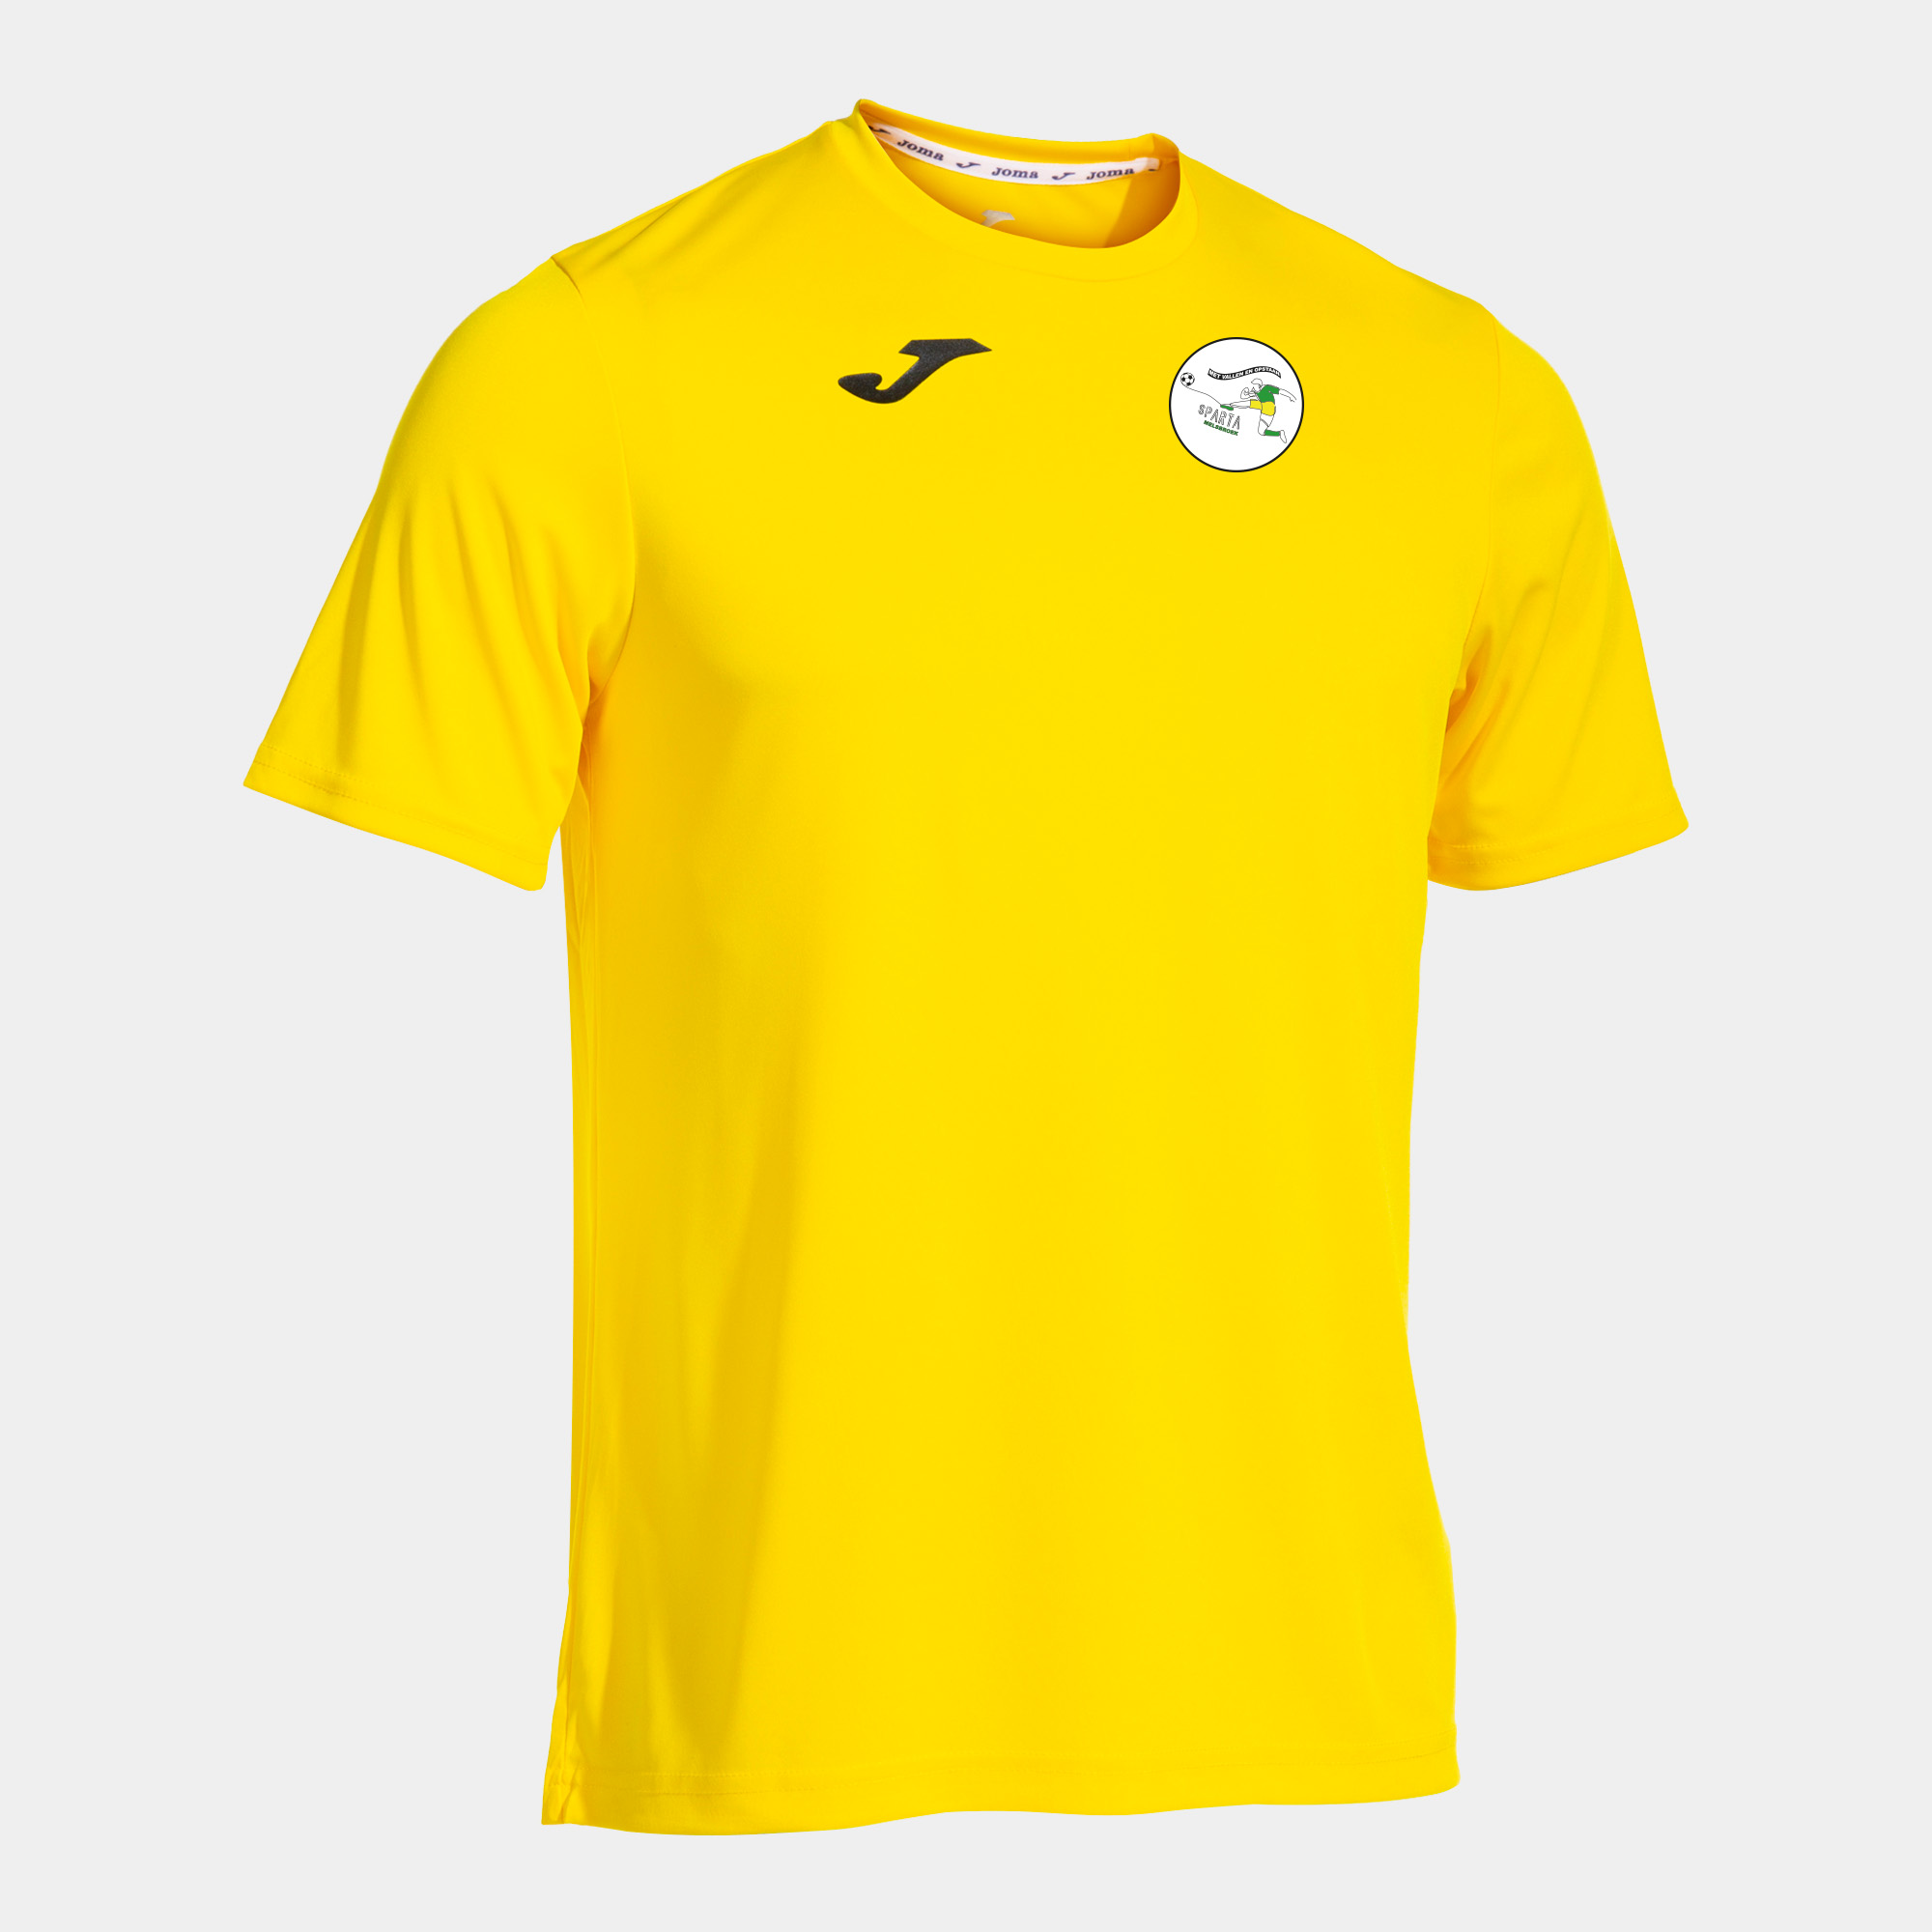 Sparta Melsbroek - Shirt short sleeve man Combi yellow